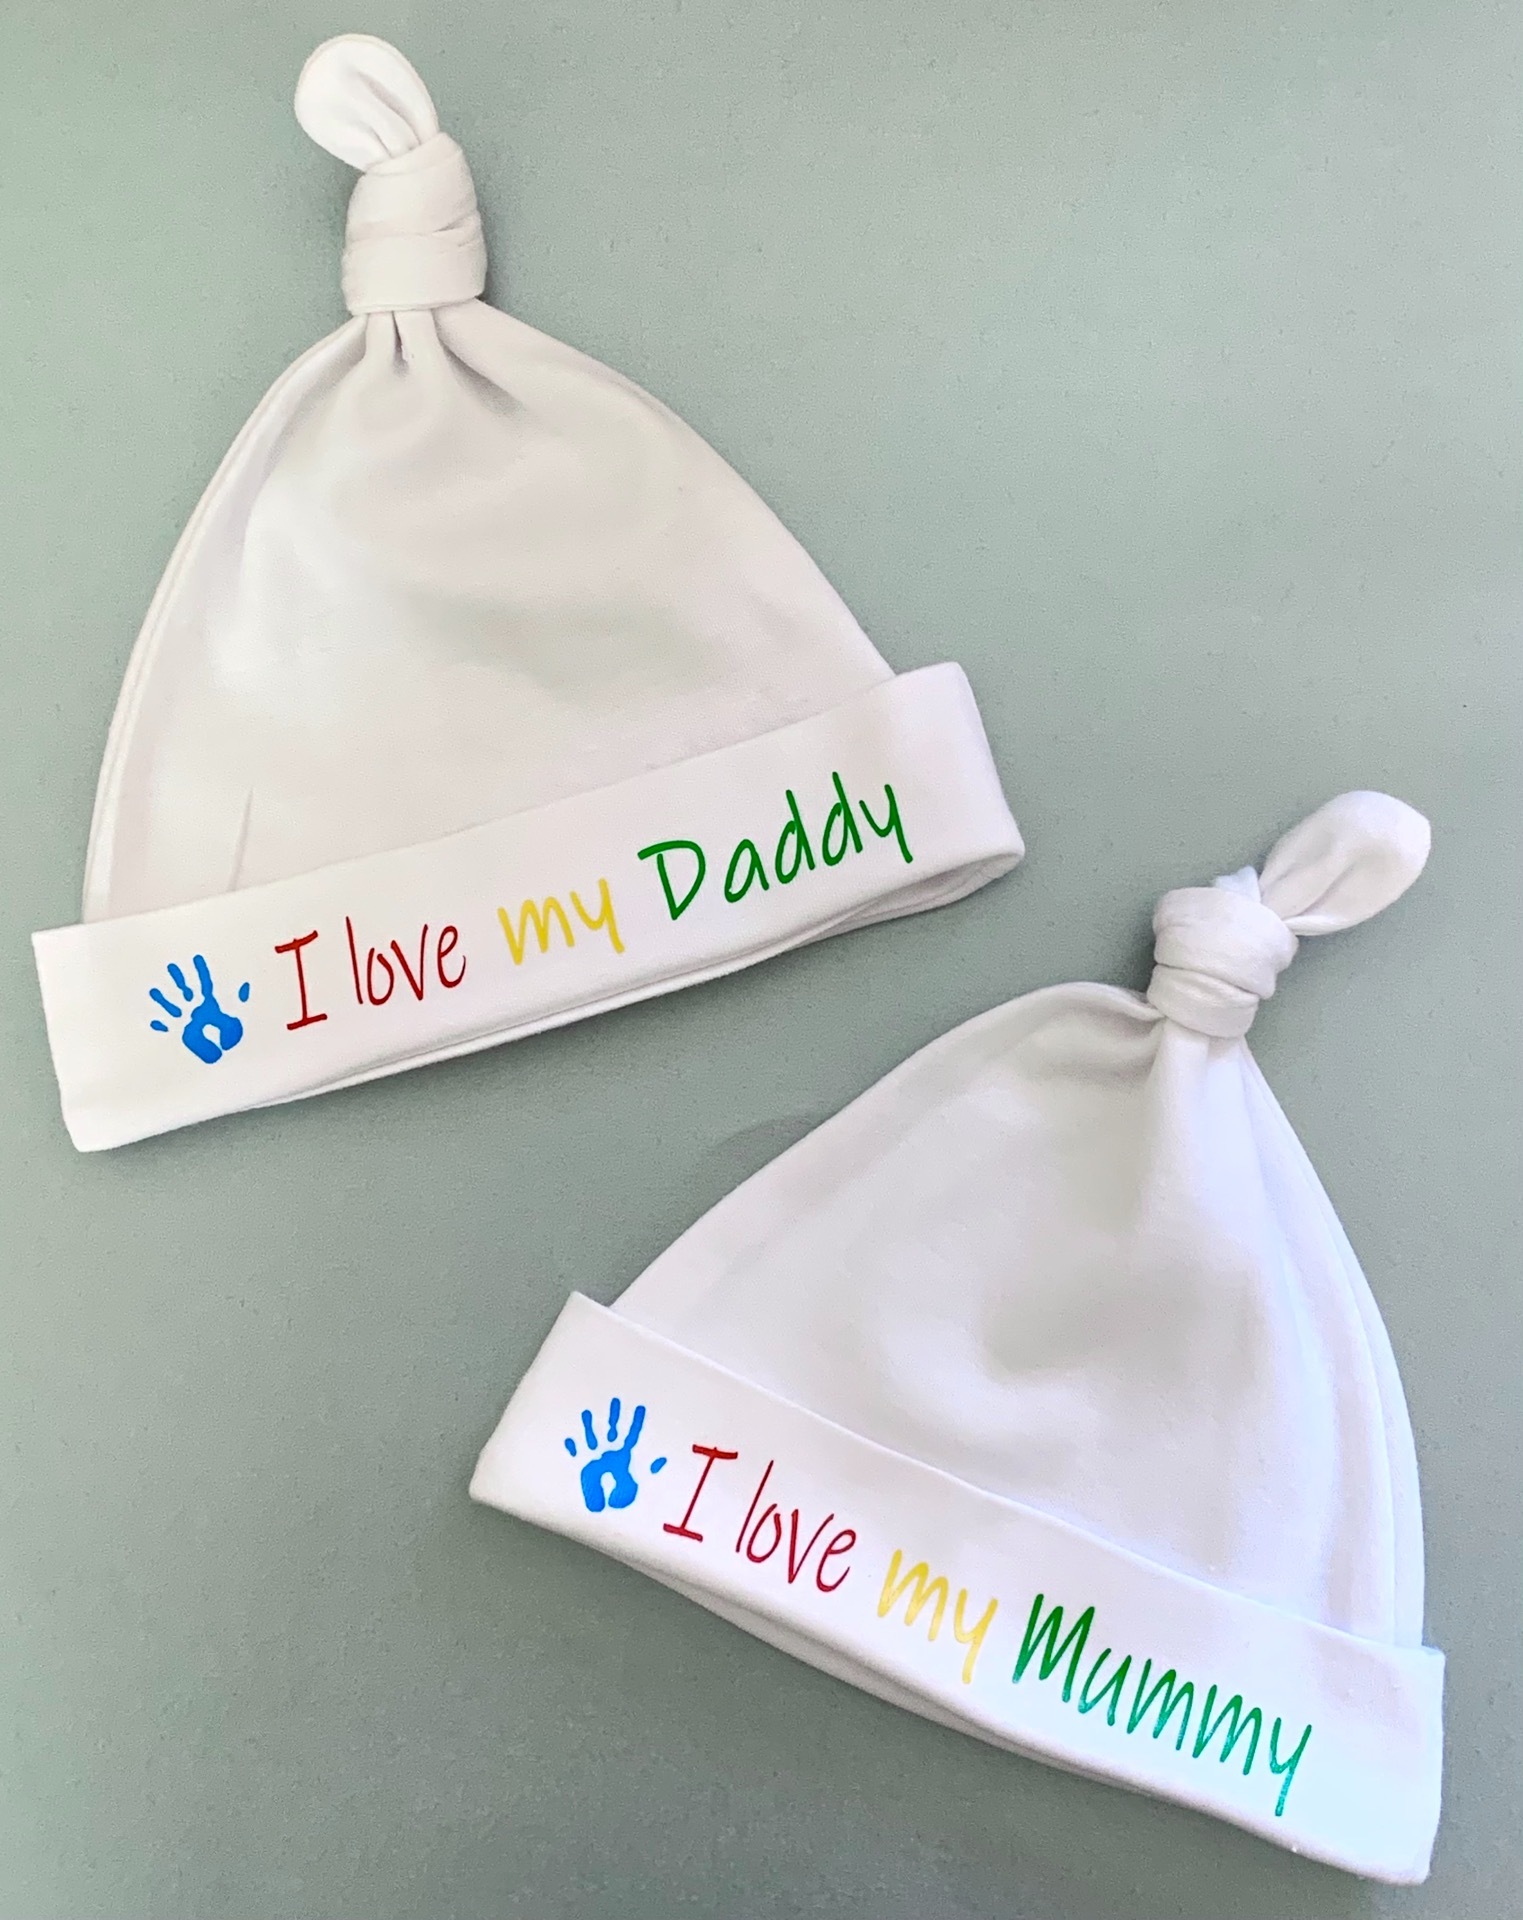 I Love My Daddy / Mummy Baby hats